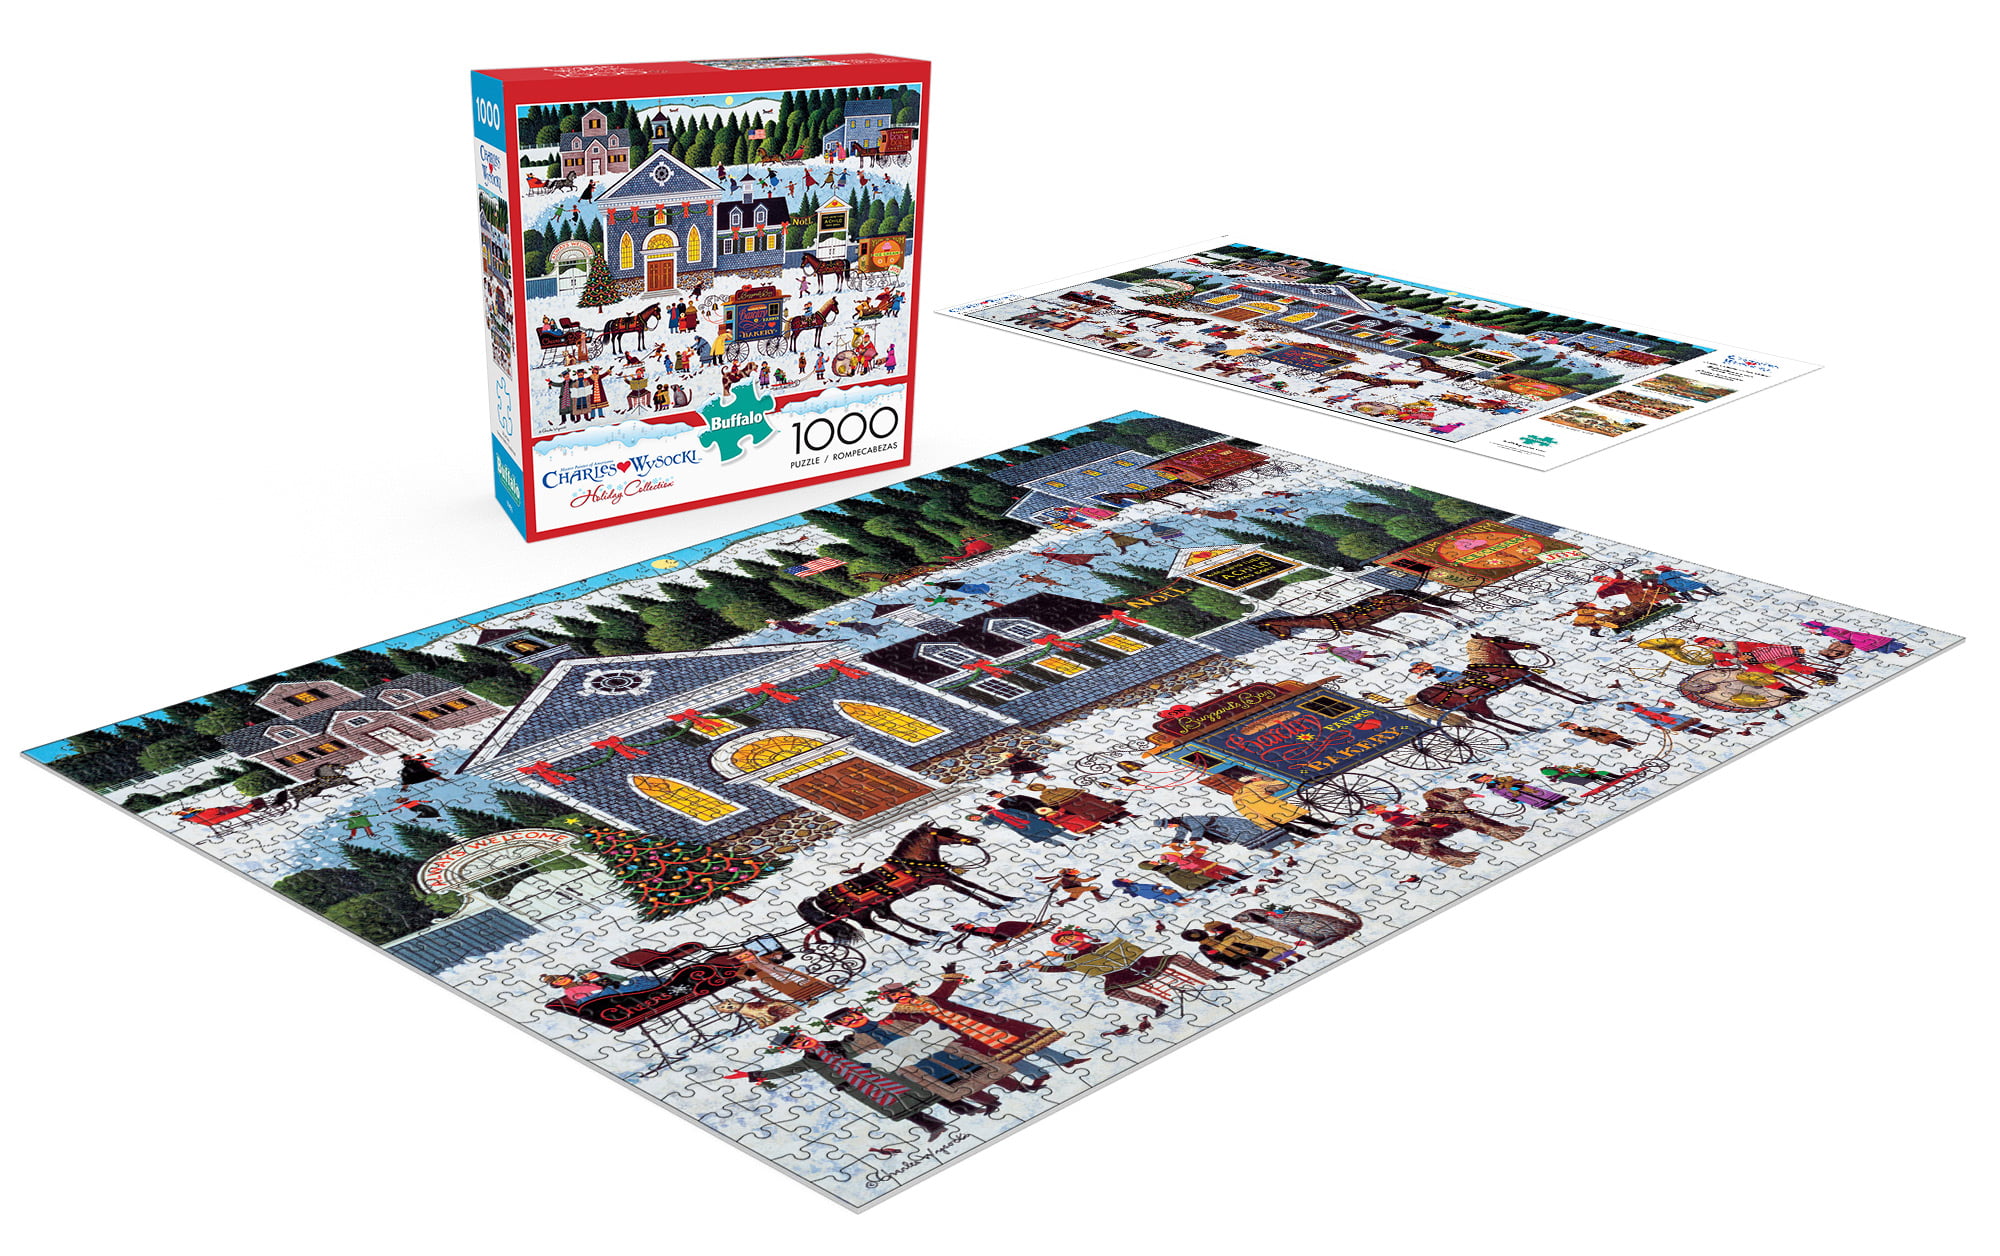 Buffalo Games Churchyard Christmas by Charles Wysocki Jigsaw Puzzle 11440 for sale online 